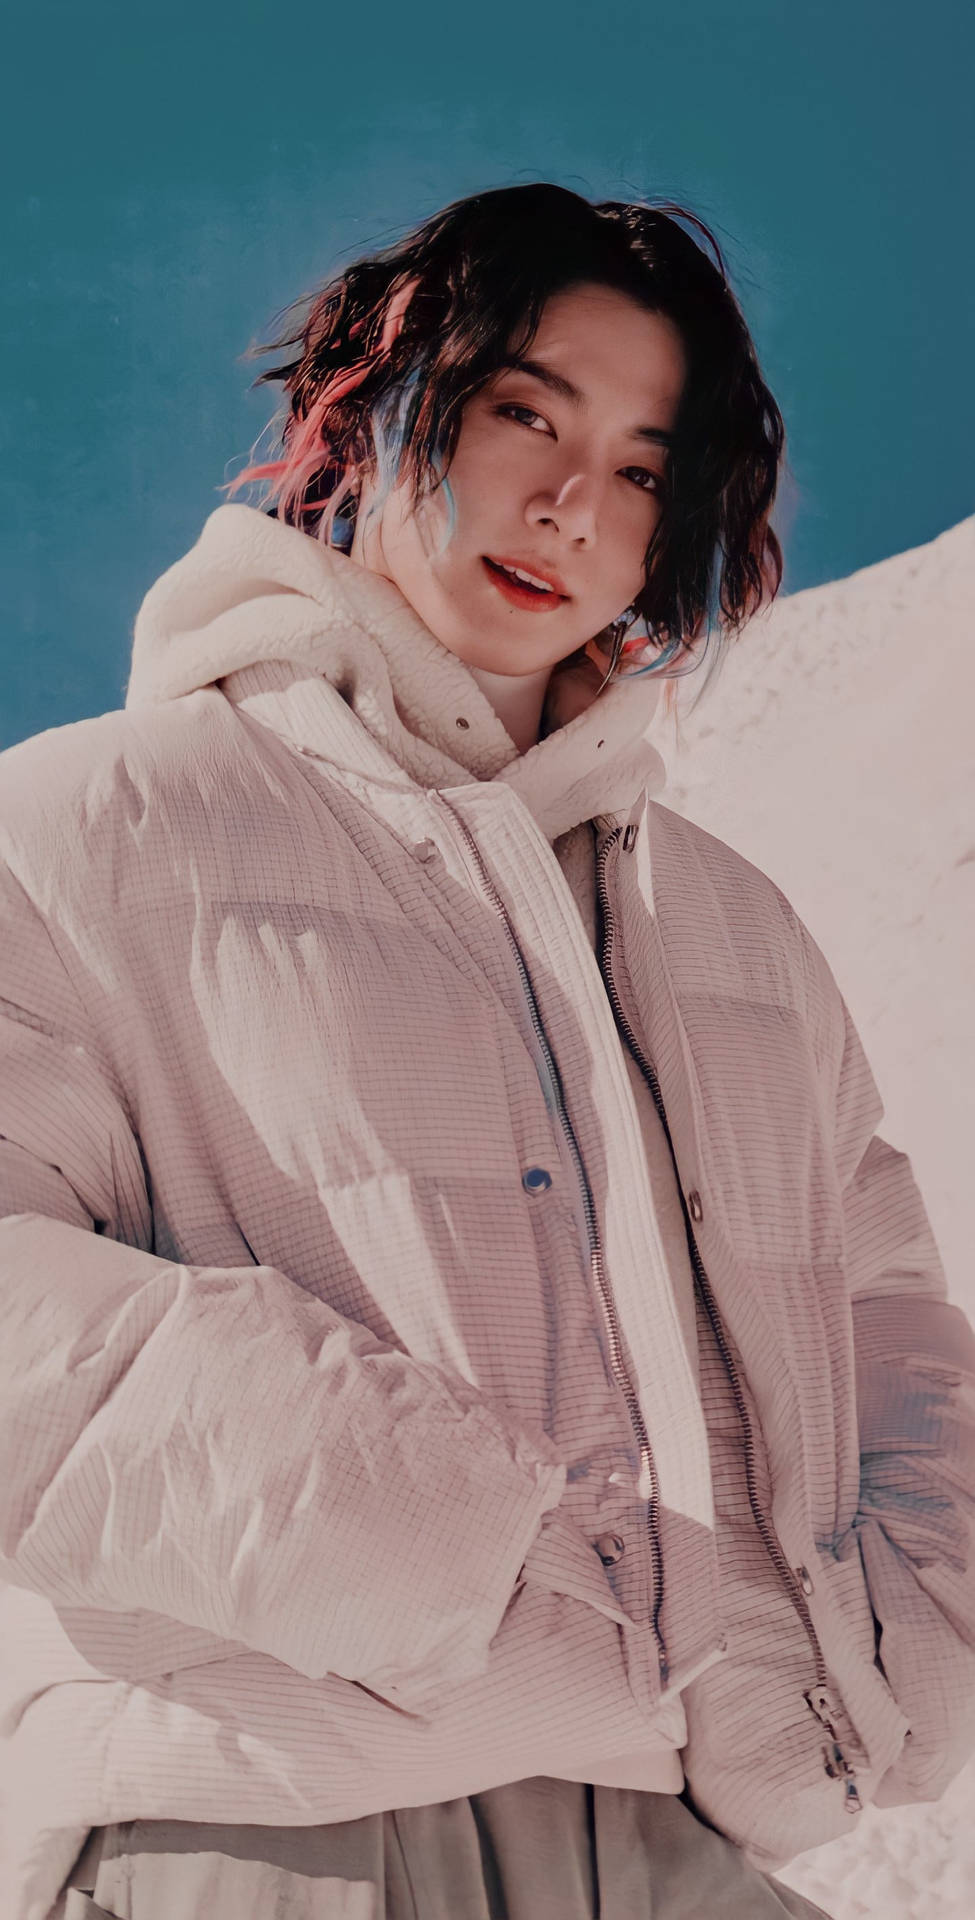 Bts Jung Kook Cute Winter Jacket Wallpaper